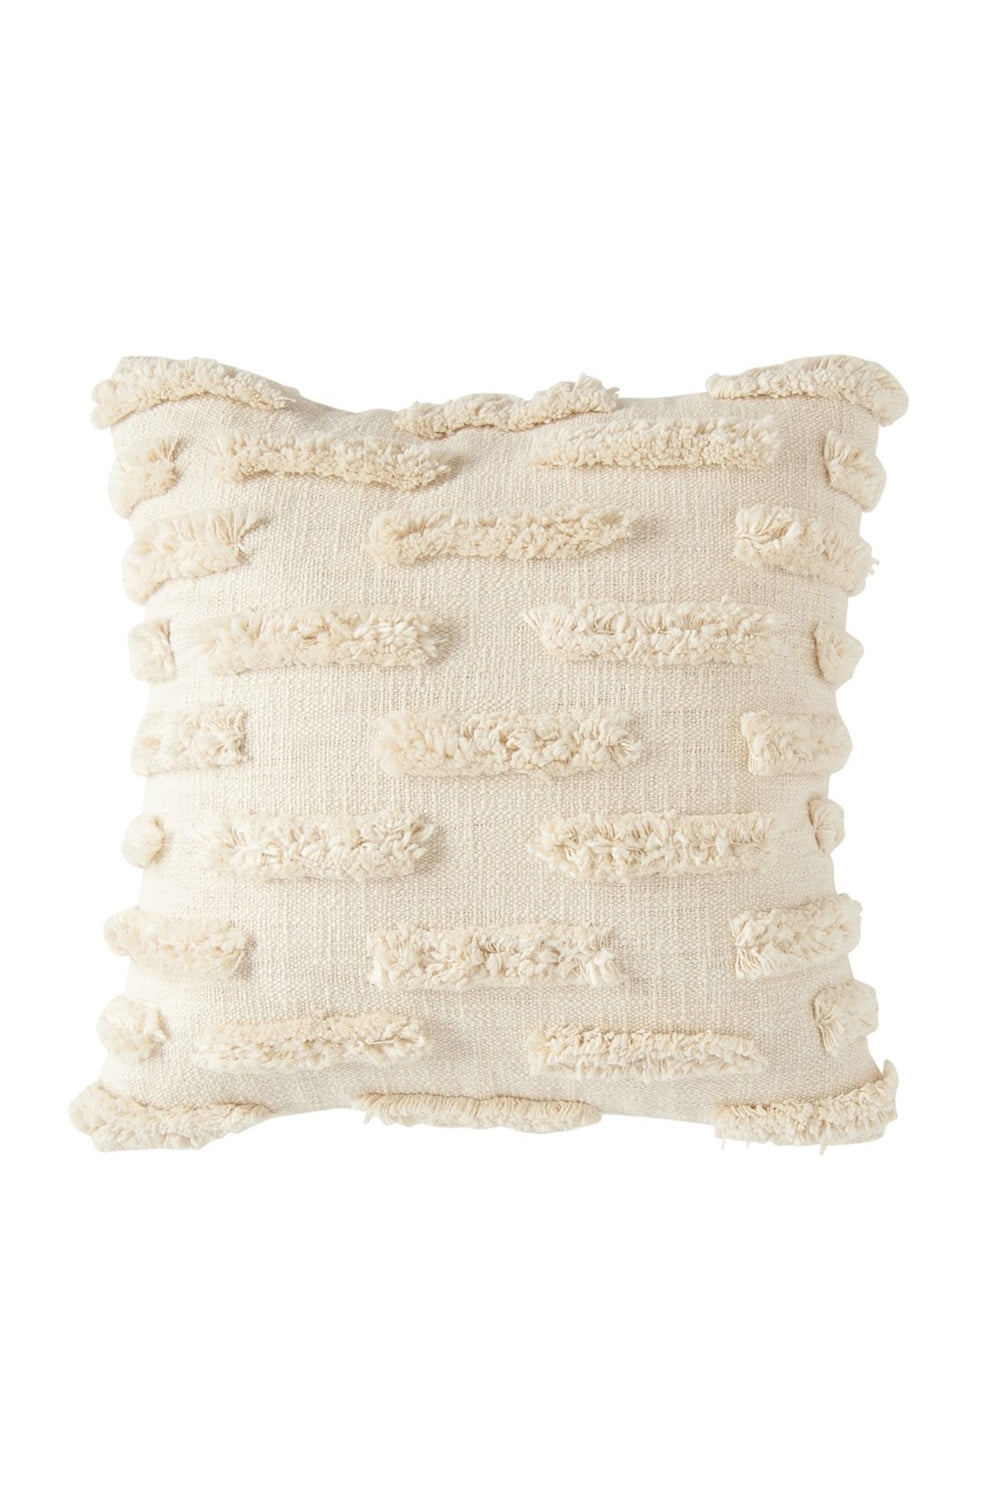 Ivory Shag Block Pillow